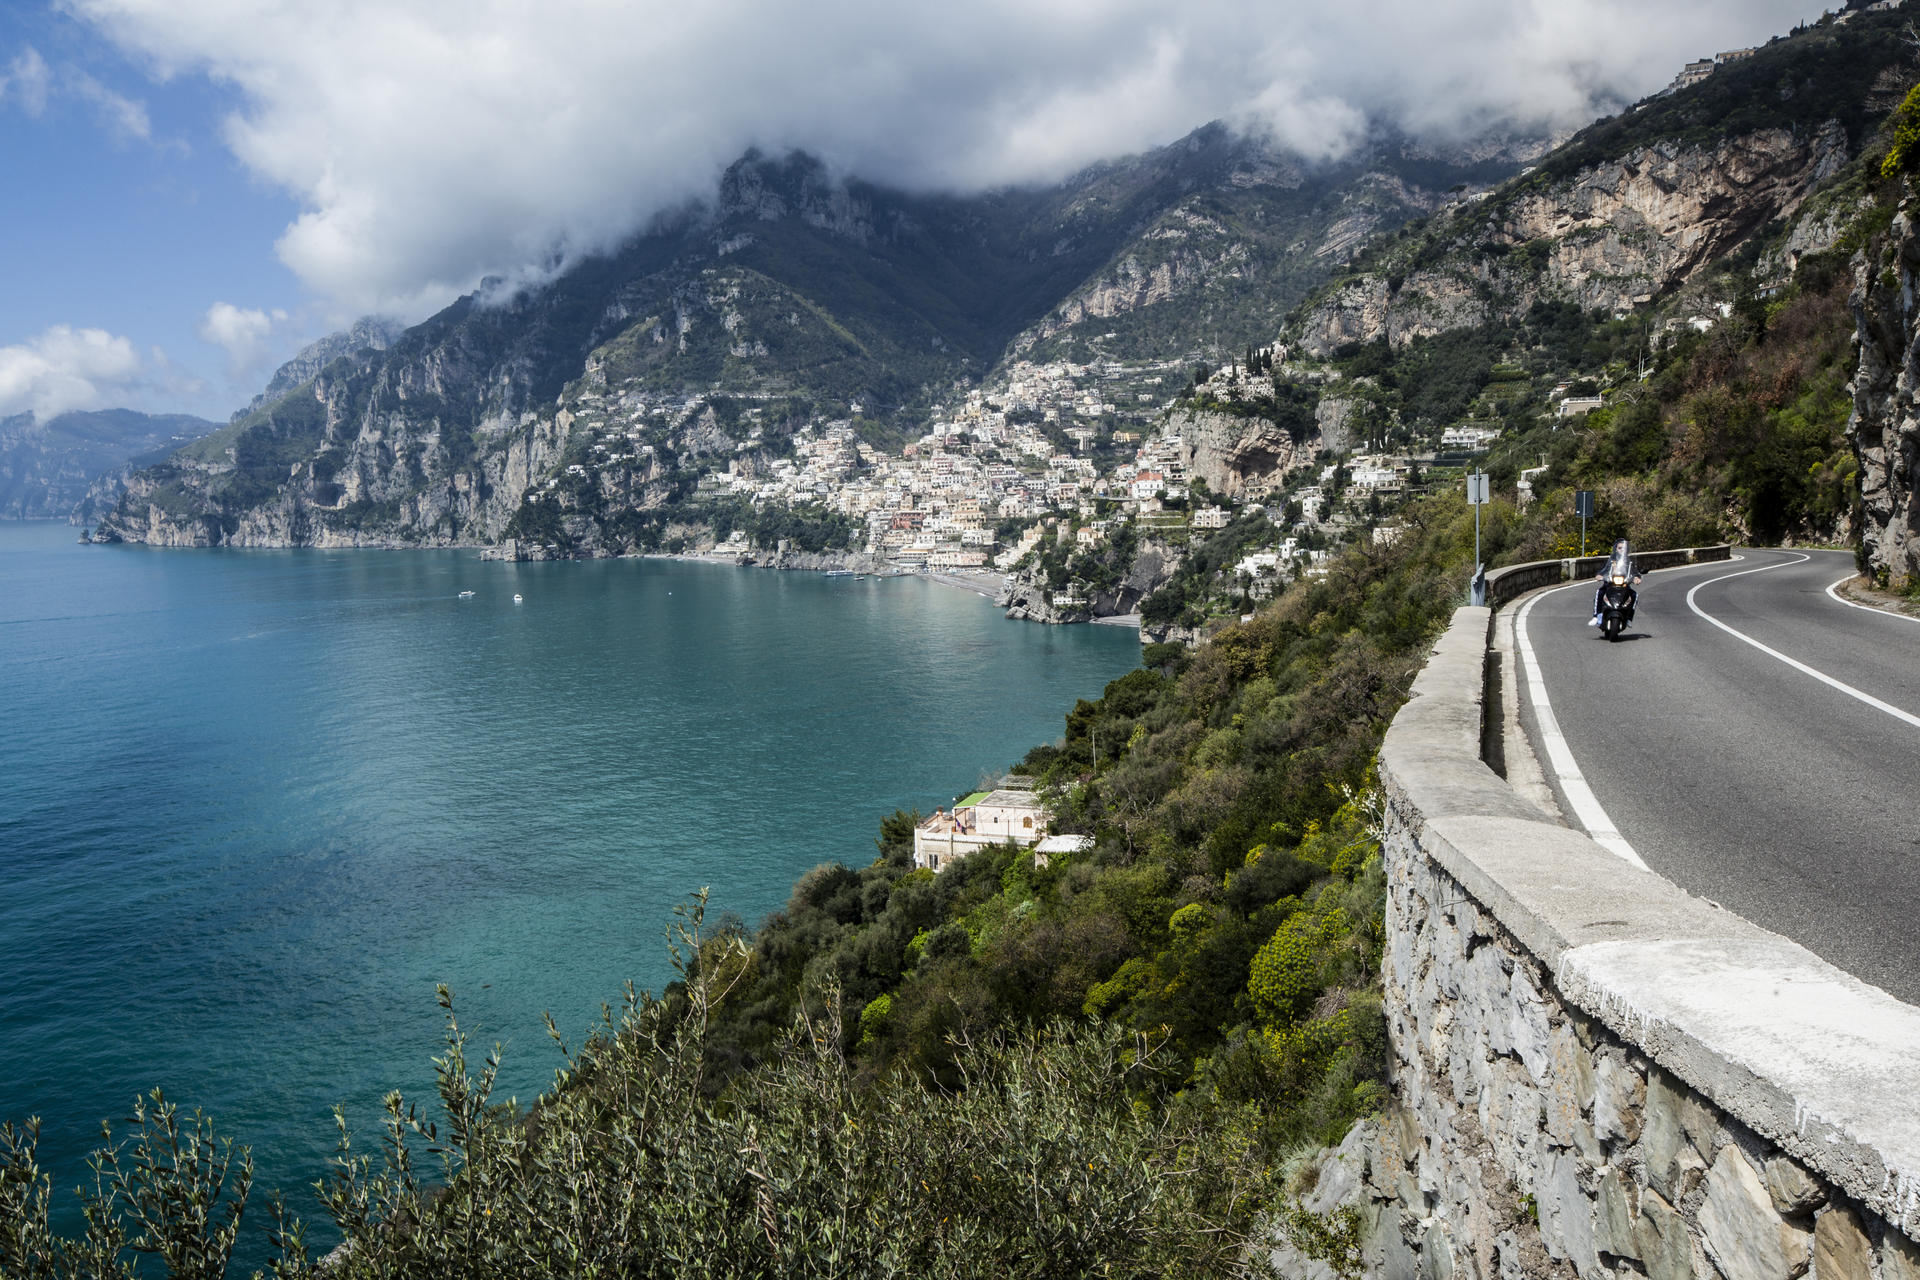 The Amalfi coast road looking towards Positano.